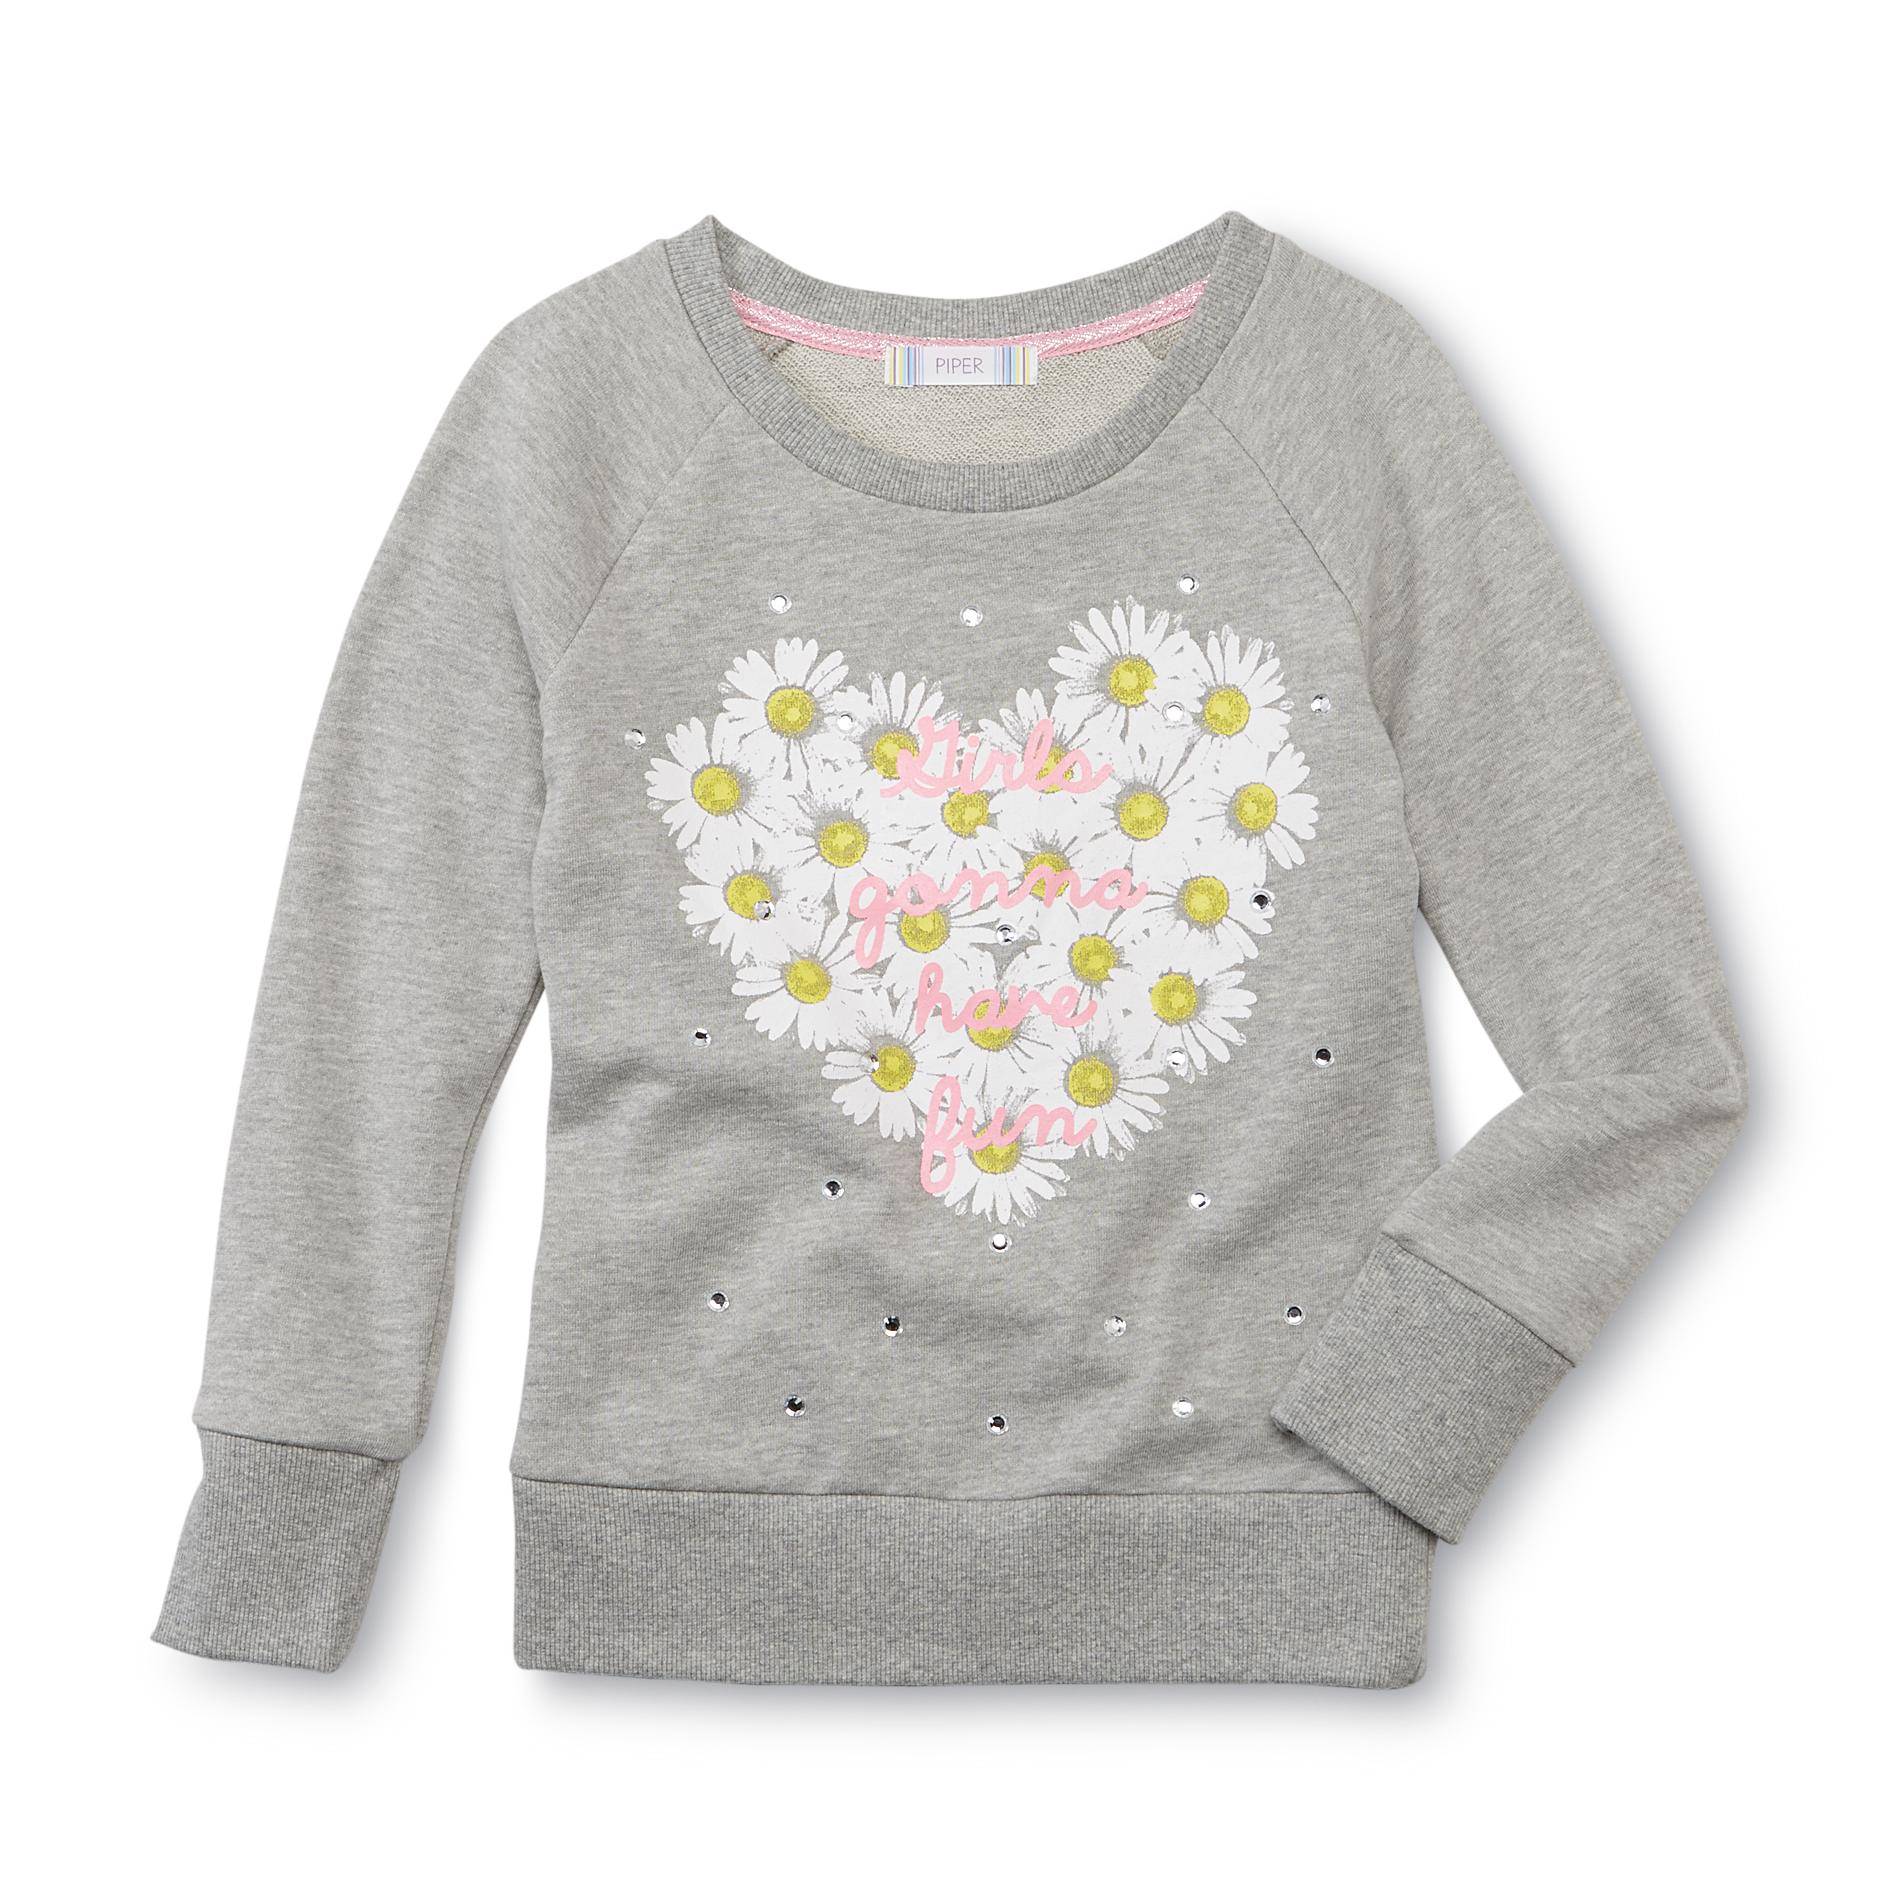 Piper Girl's Sweatshirt - Daisy Heart